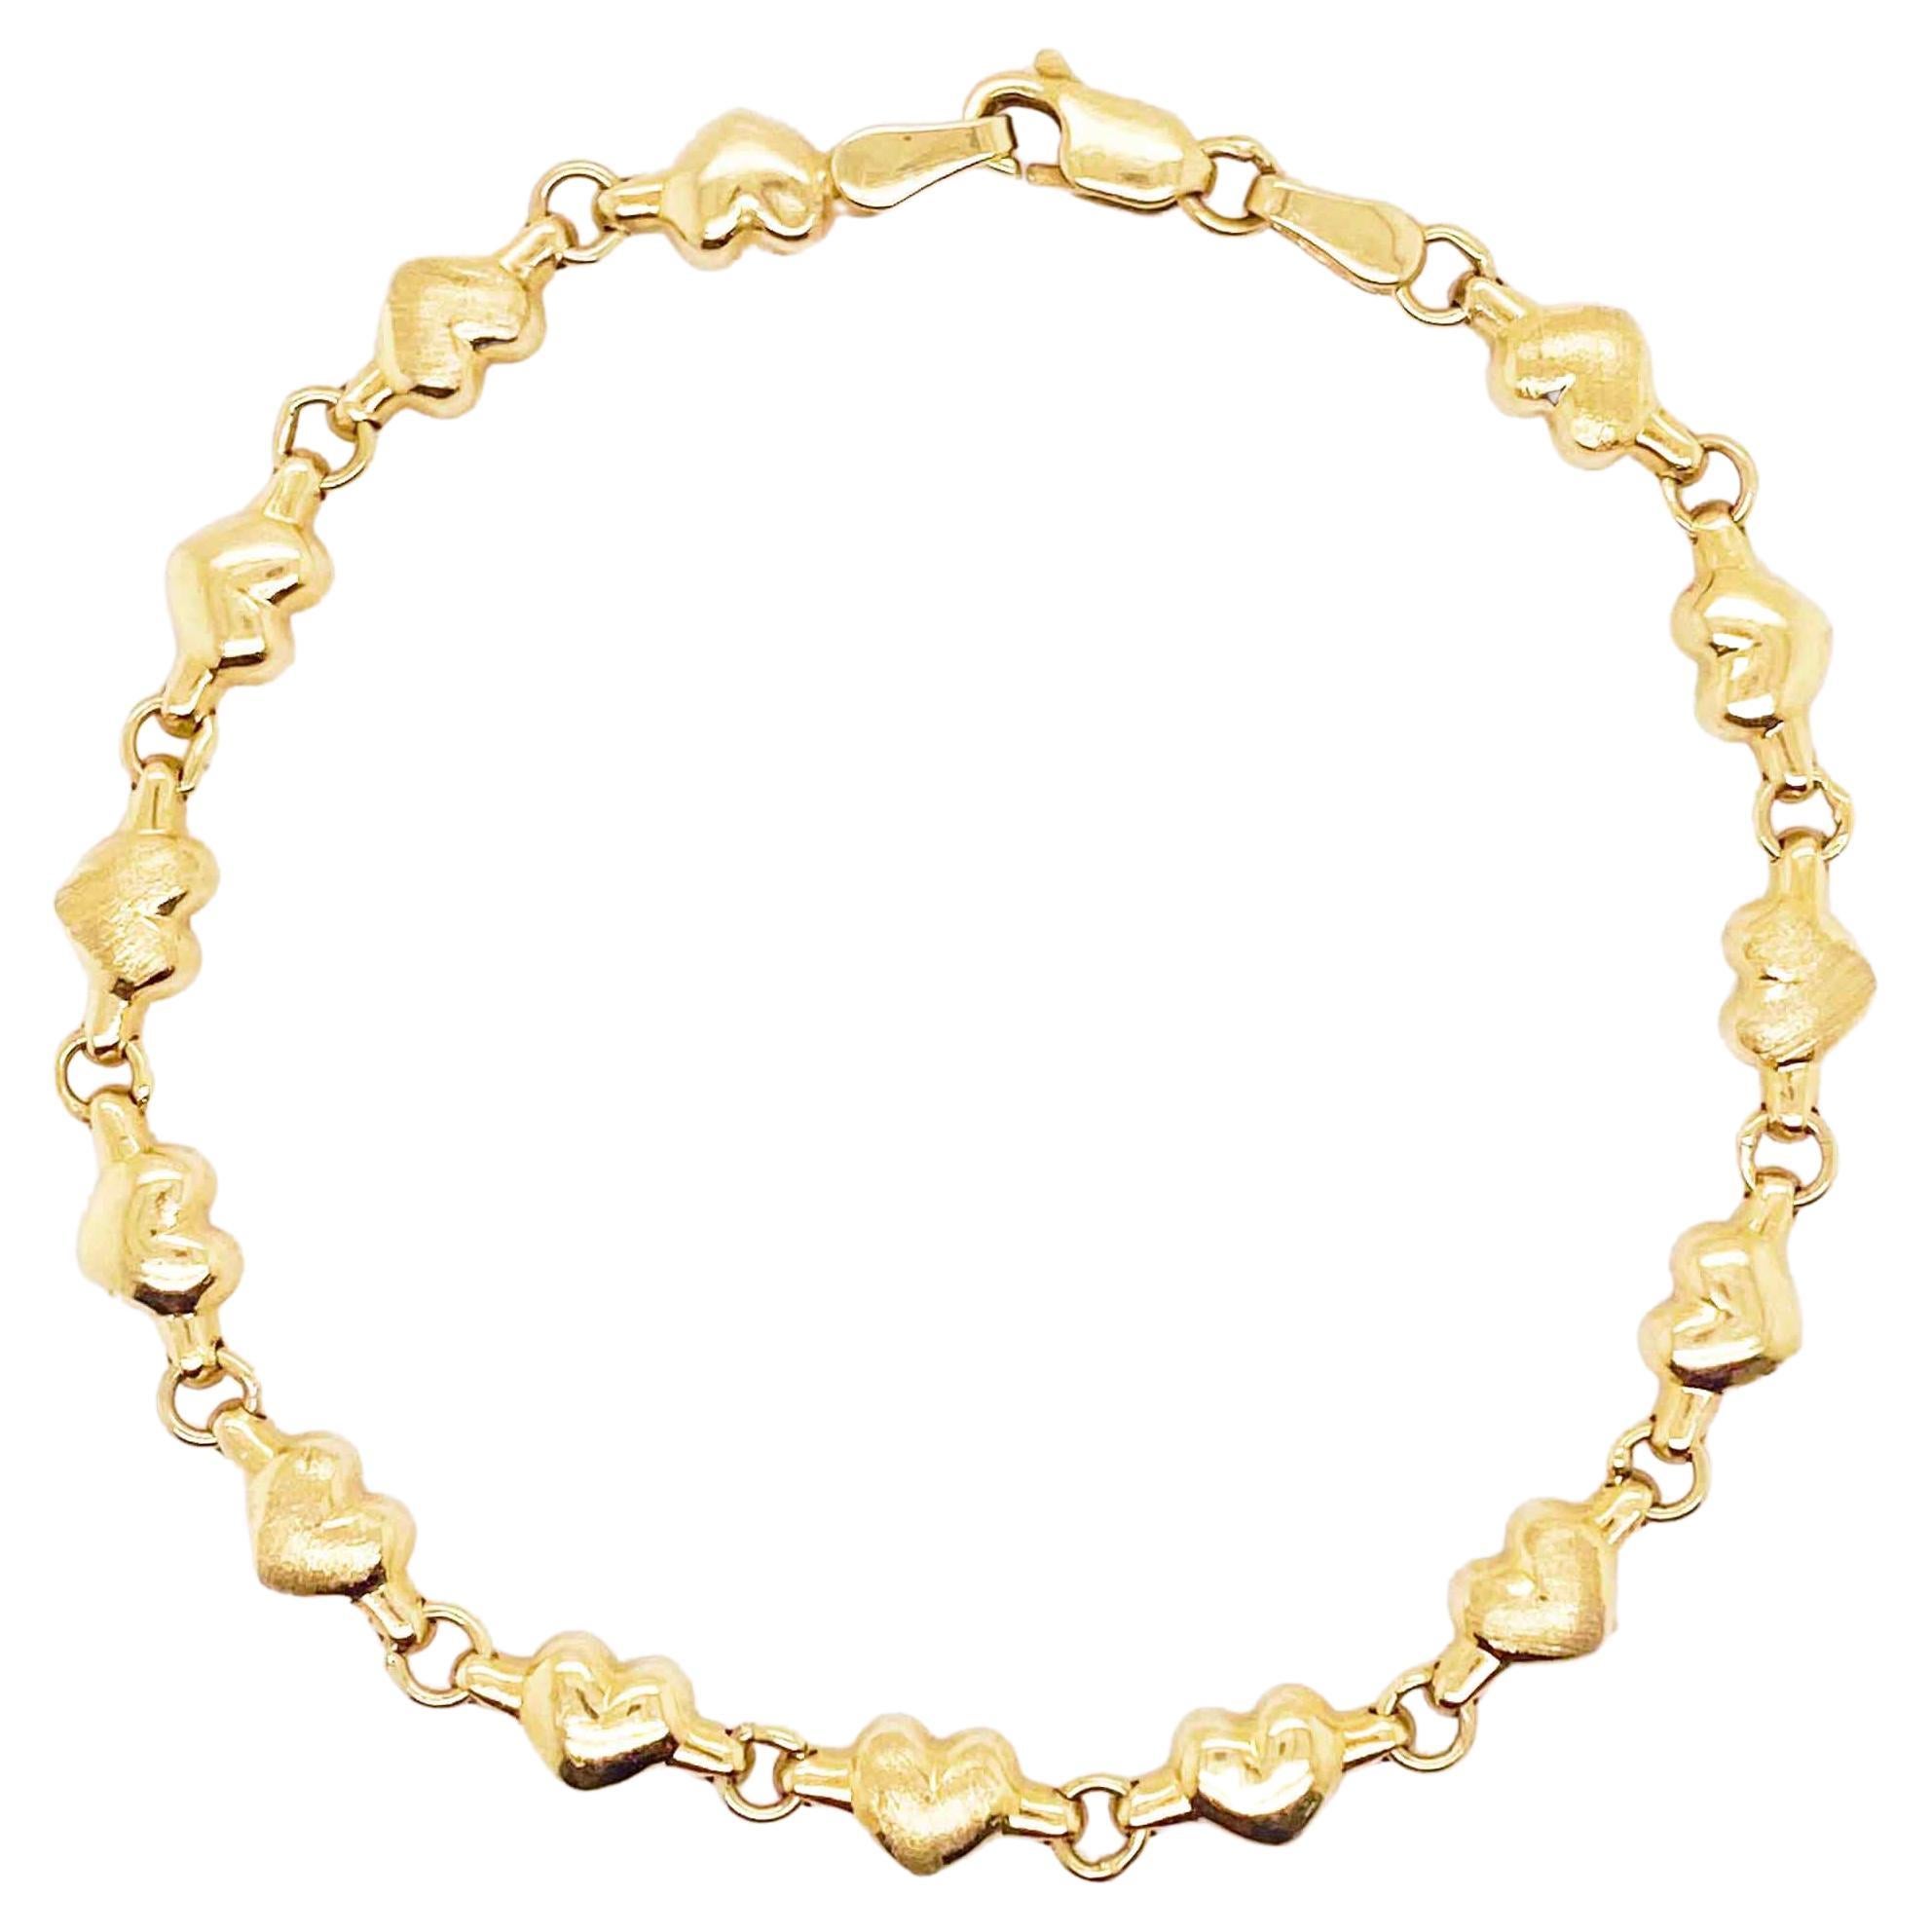 Heart Link Bracelet, Yellow Gold, 4.3 Grams, Adorable Chain Bracelet